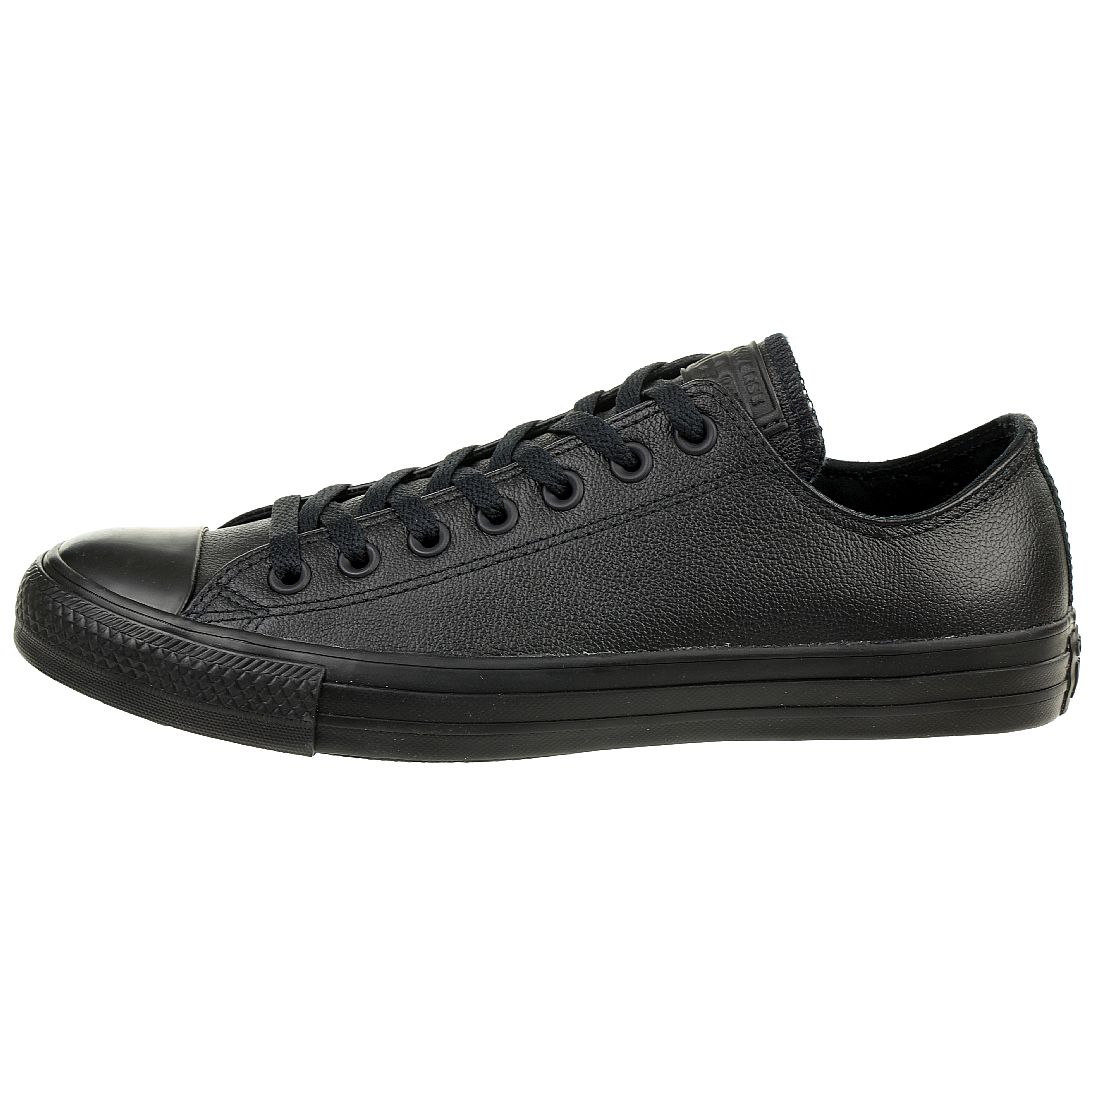 Converse C Taylor All Star OX Chuck Sneaker Leder mono schwarz 135253C 